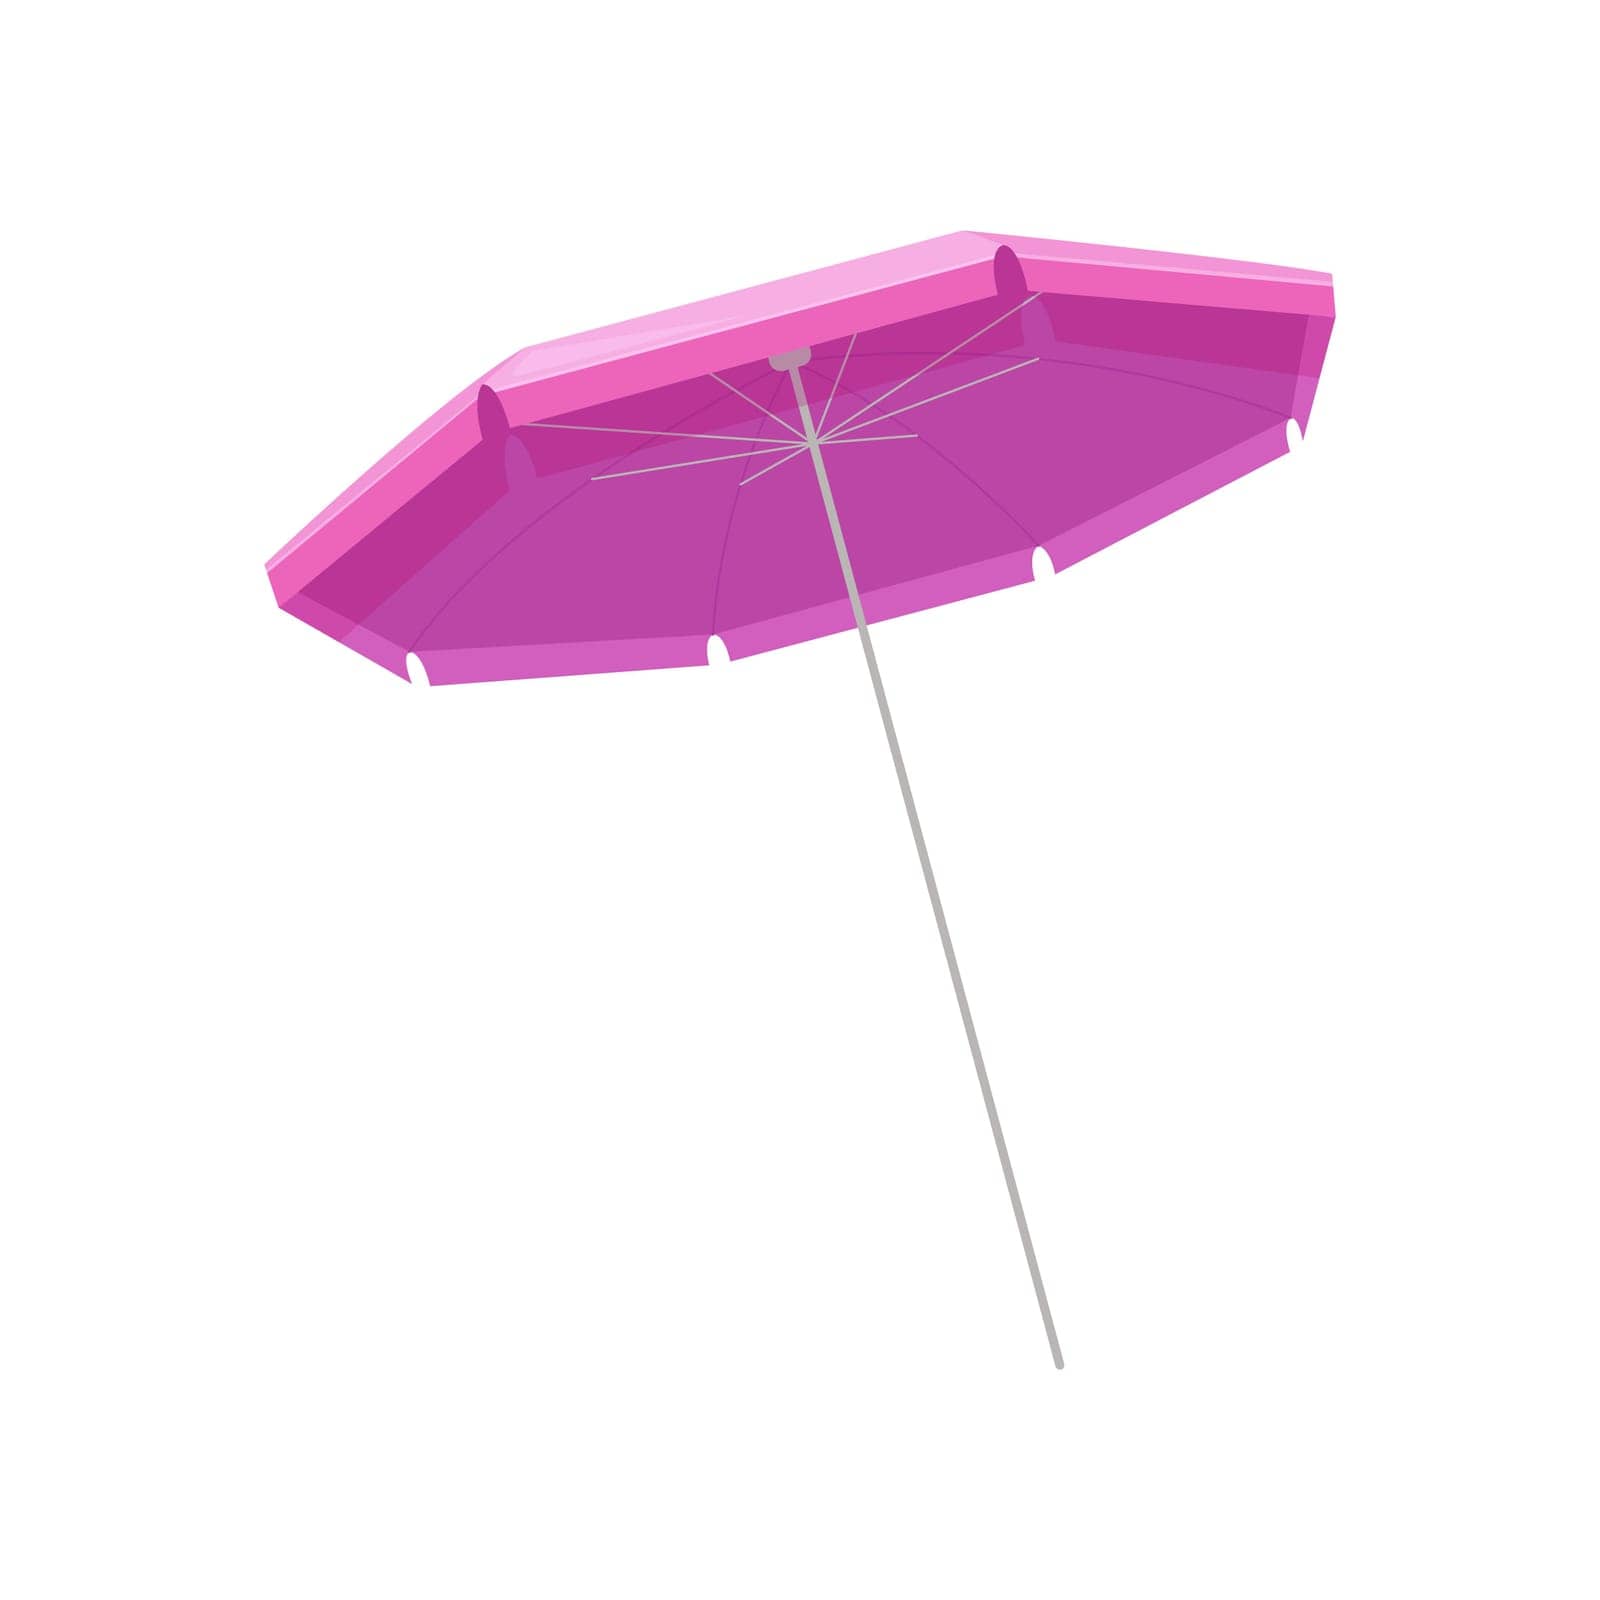 Sea beach umbrella. Beach sunbathing tools, sea holiday instrument cartoon vector illustration